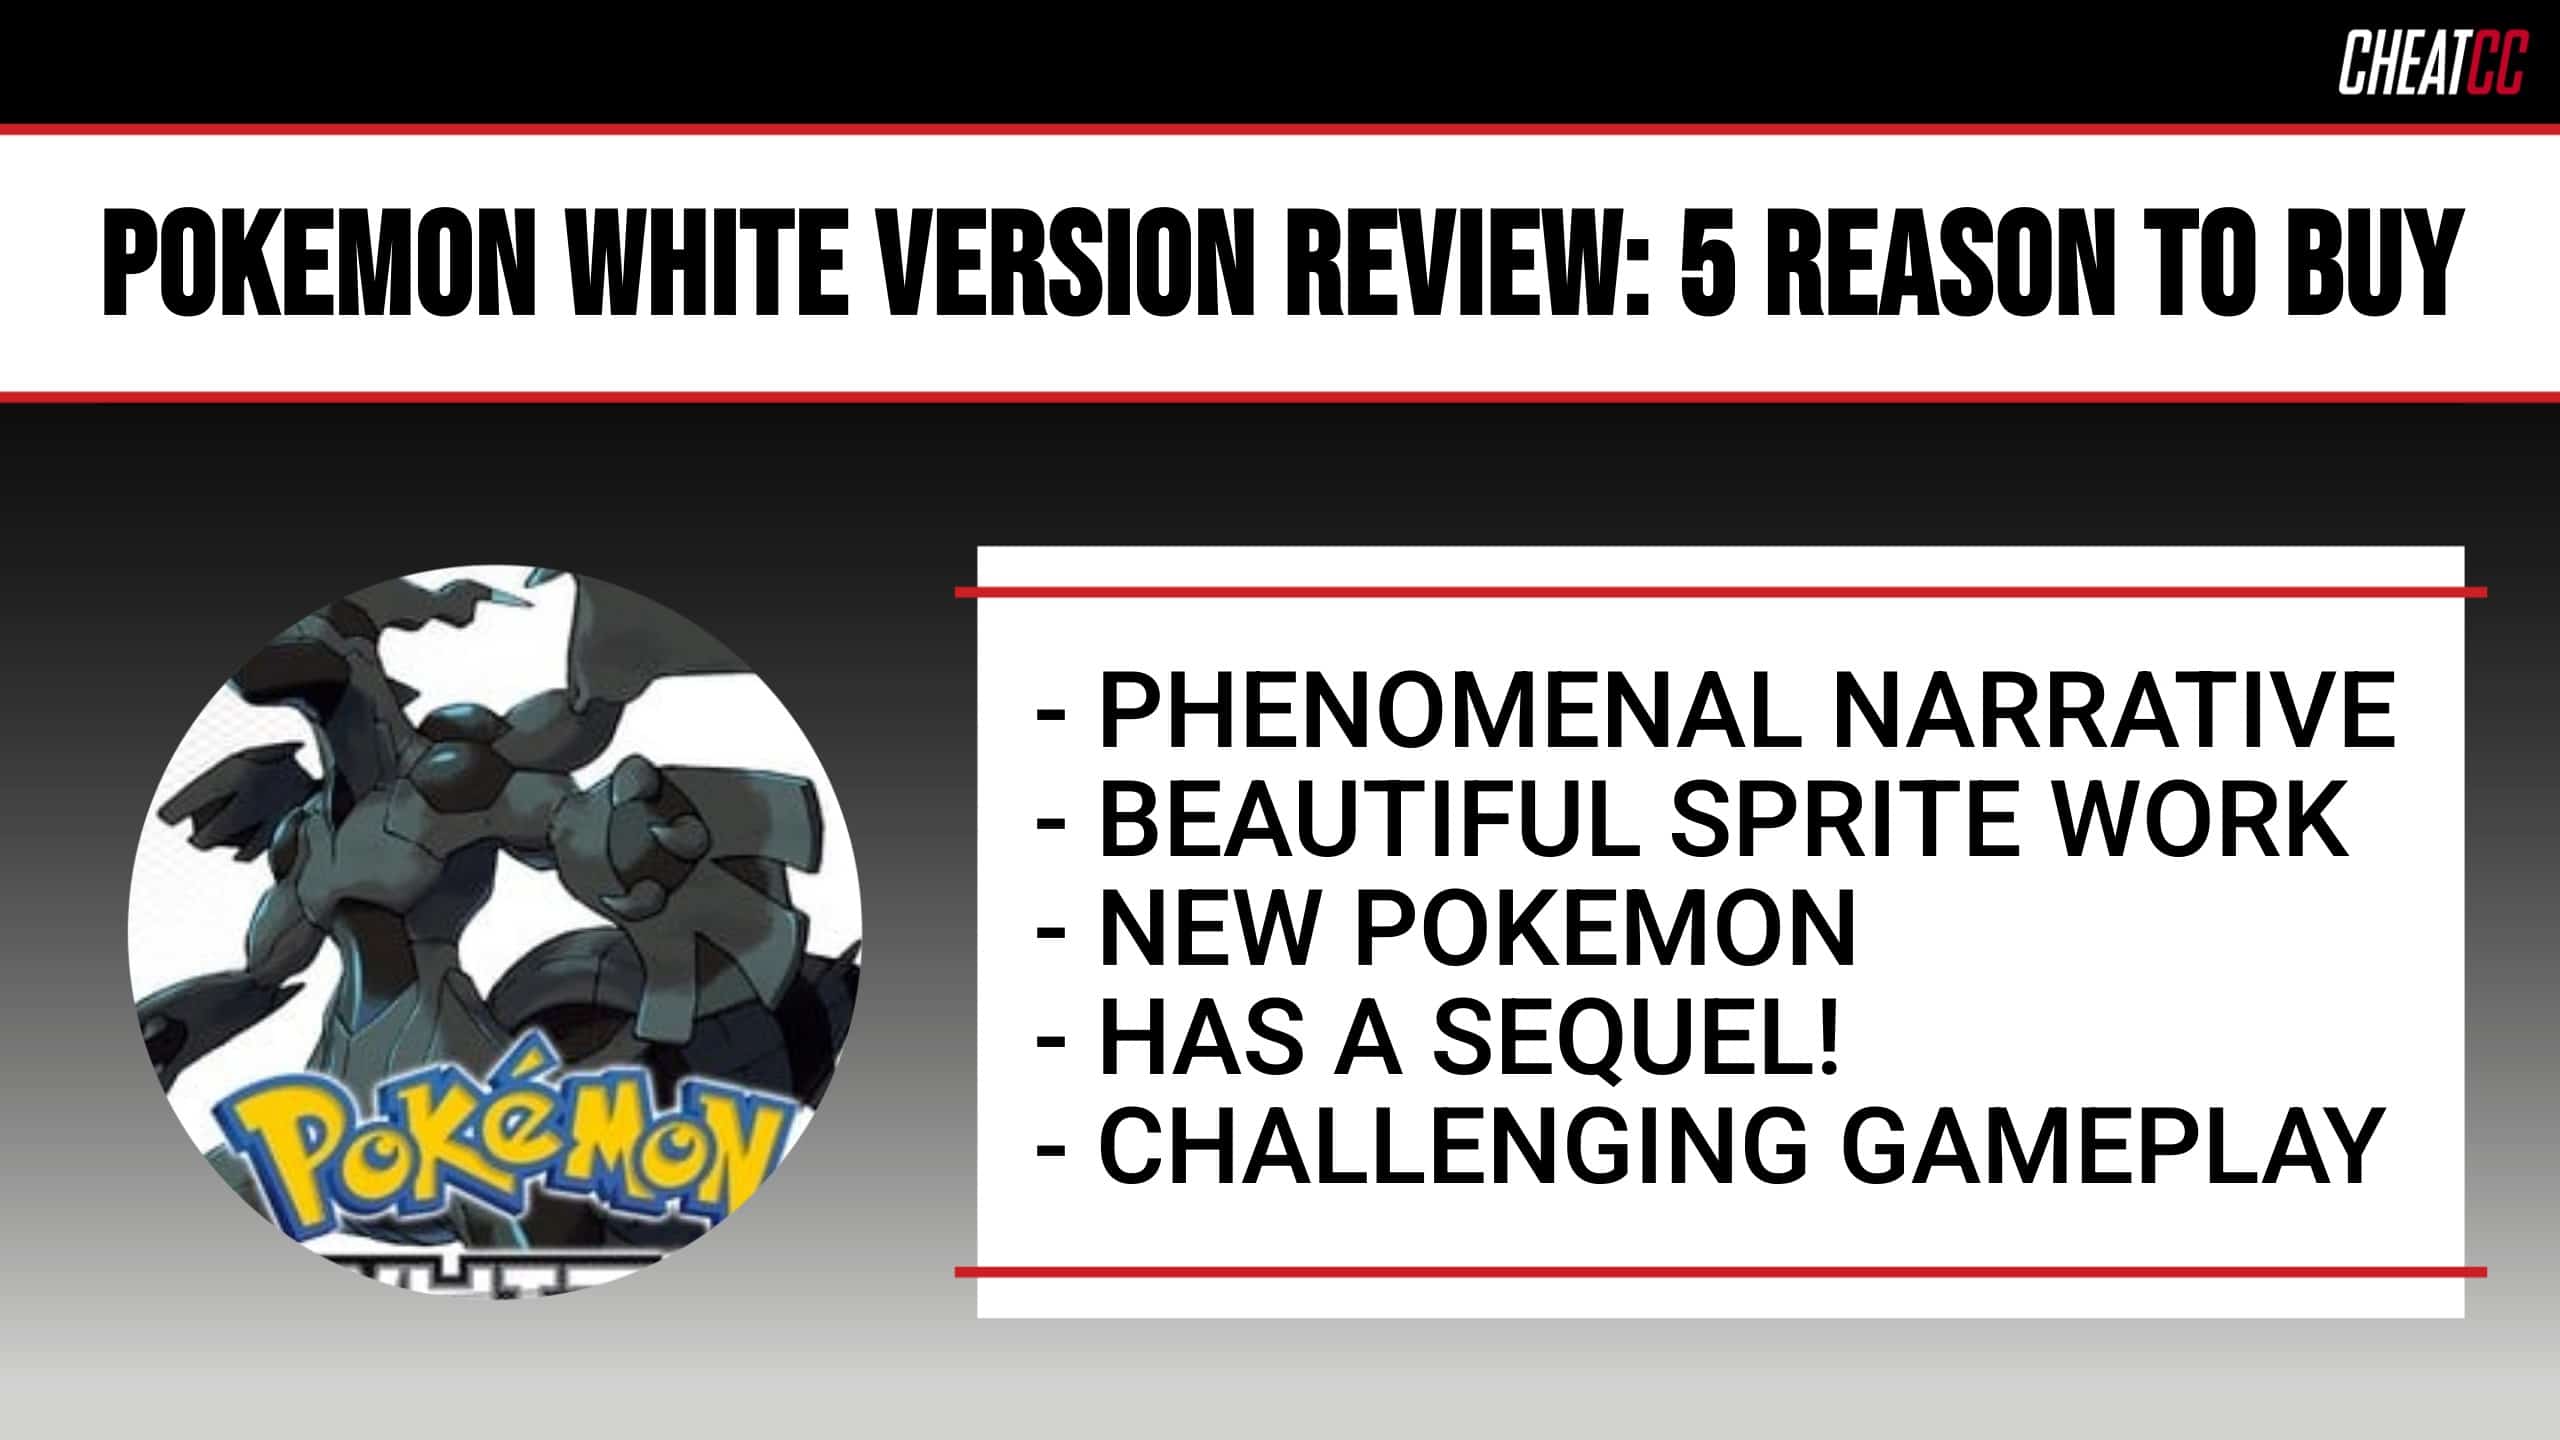 Pokemon Black And White 2 for sale